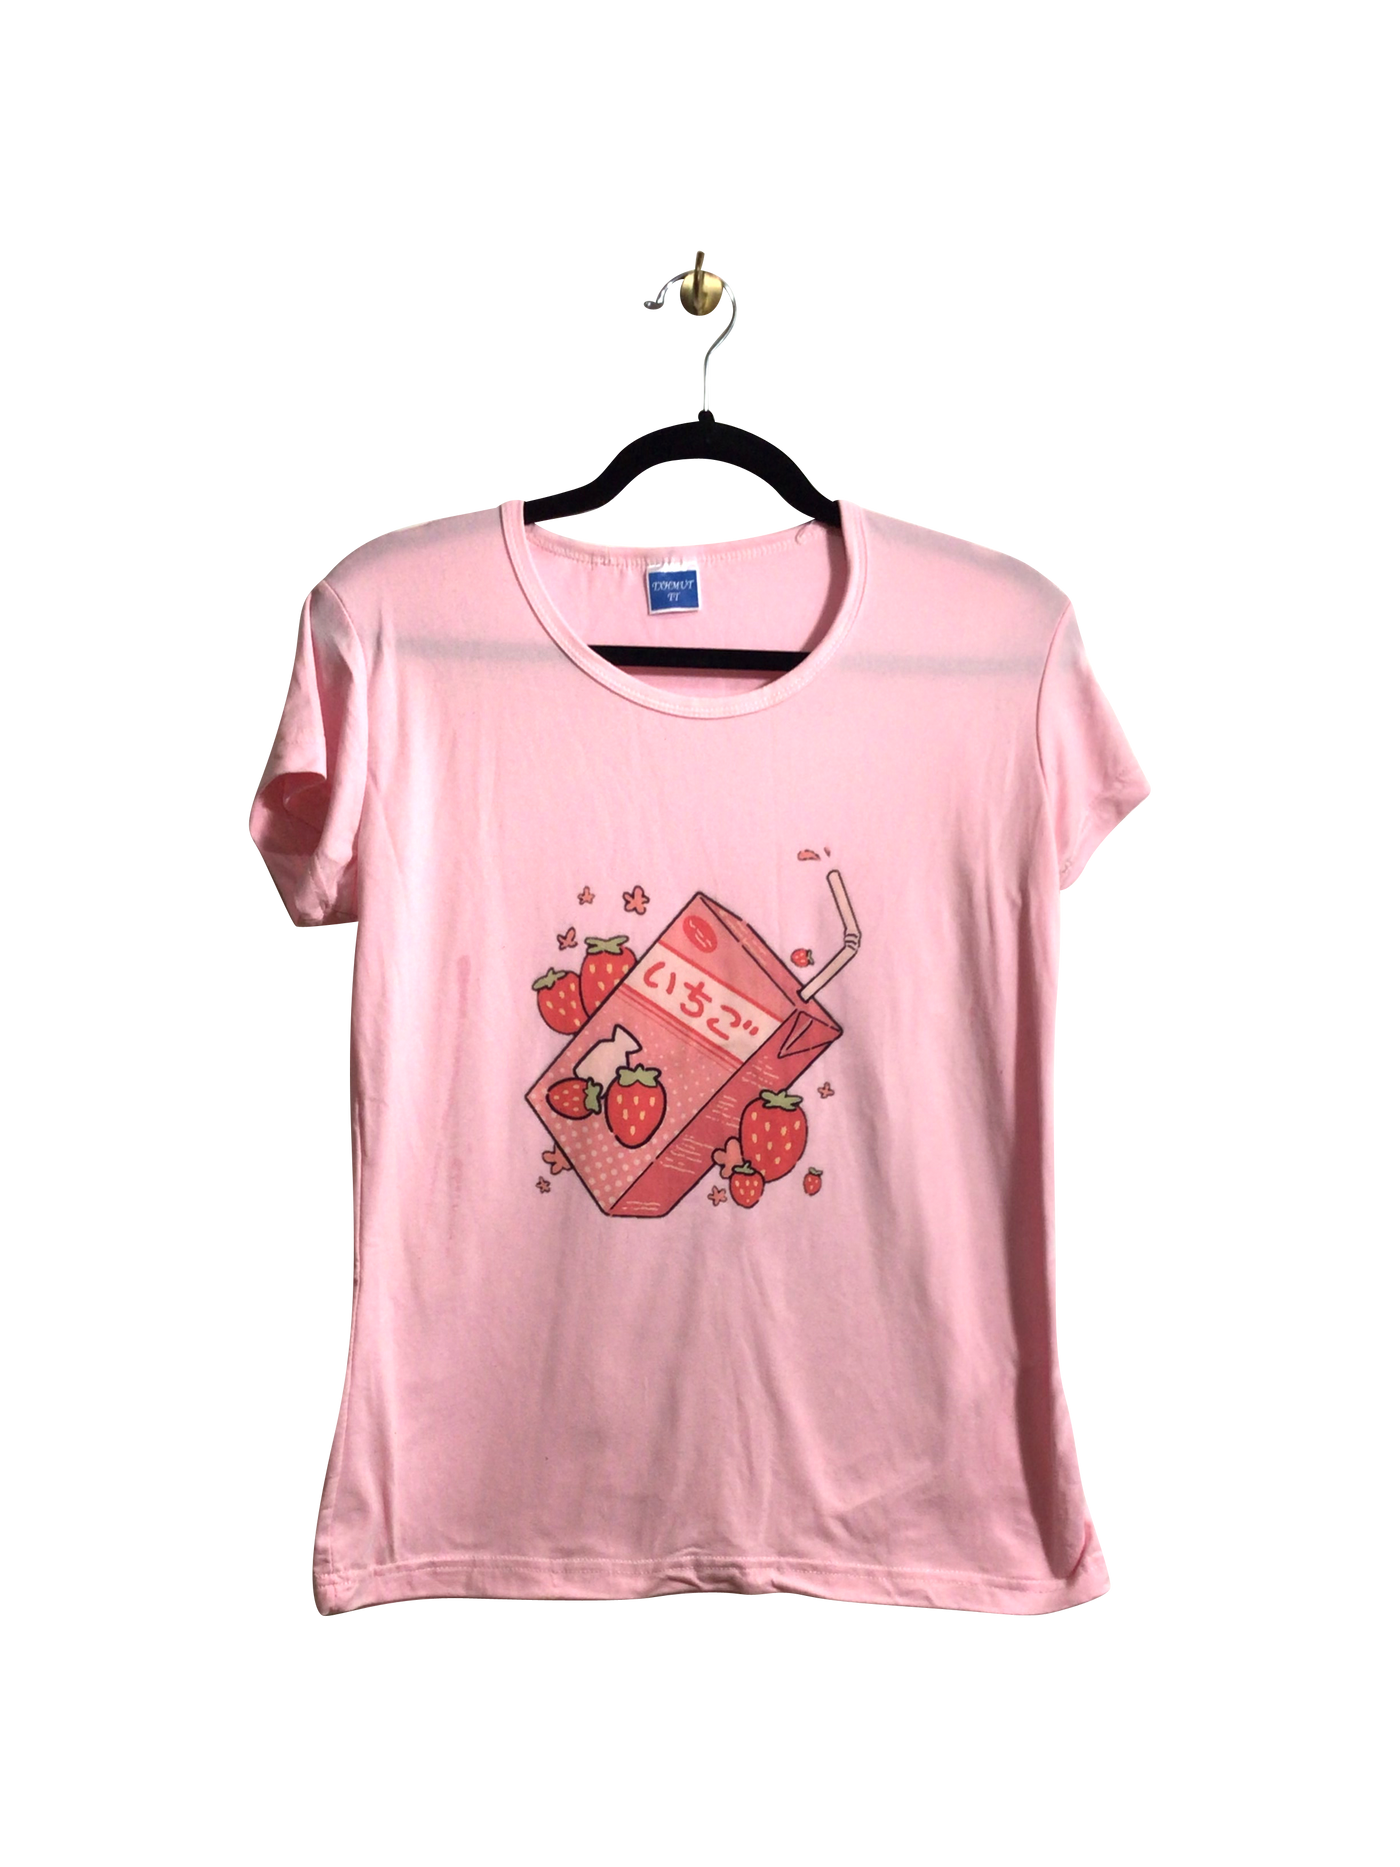 UNBRANDED Women T-Shirts Regular fit in Pink - Size 2XL | 8.99 $ KOOP